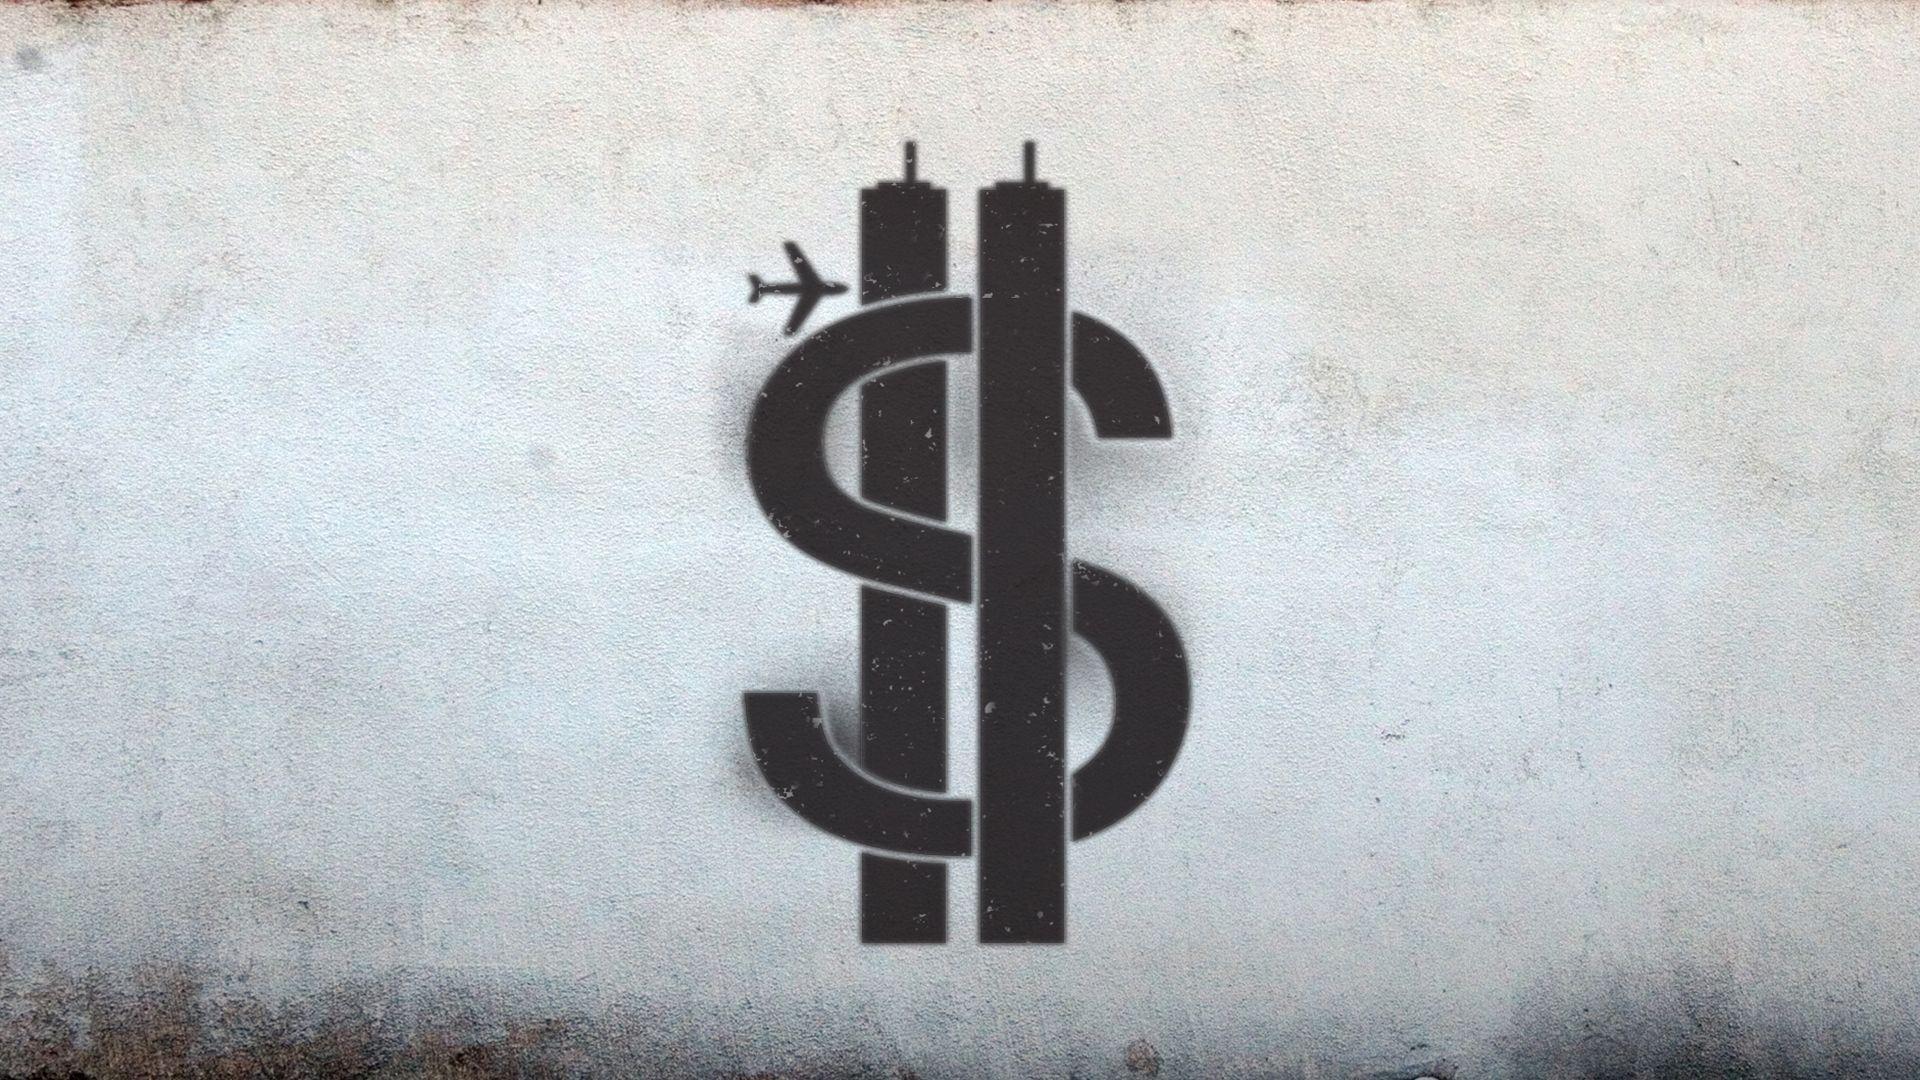 Wallpaper.wiki Capitalism Dollar Sign Graffiti Twin Towers PIC